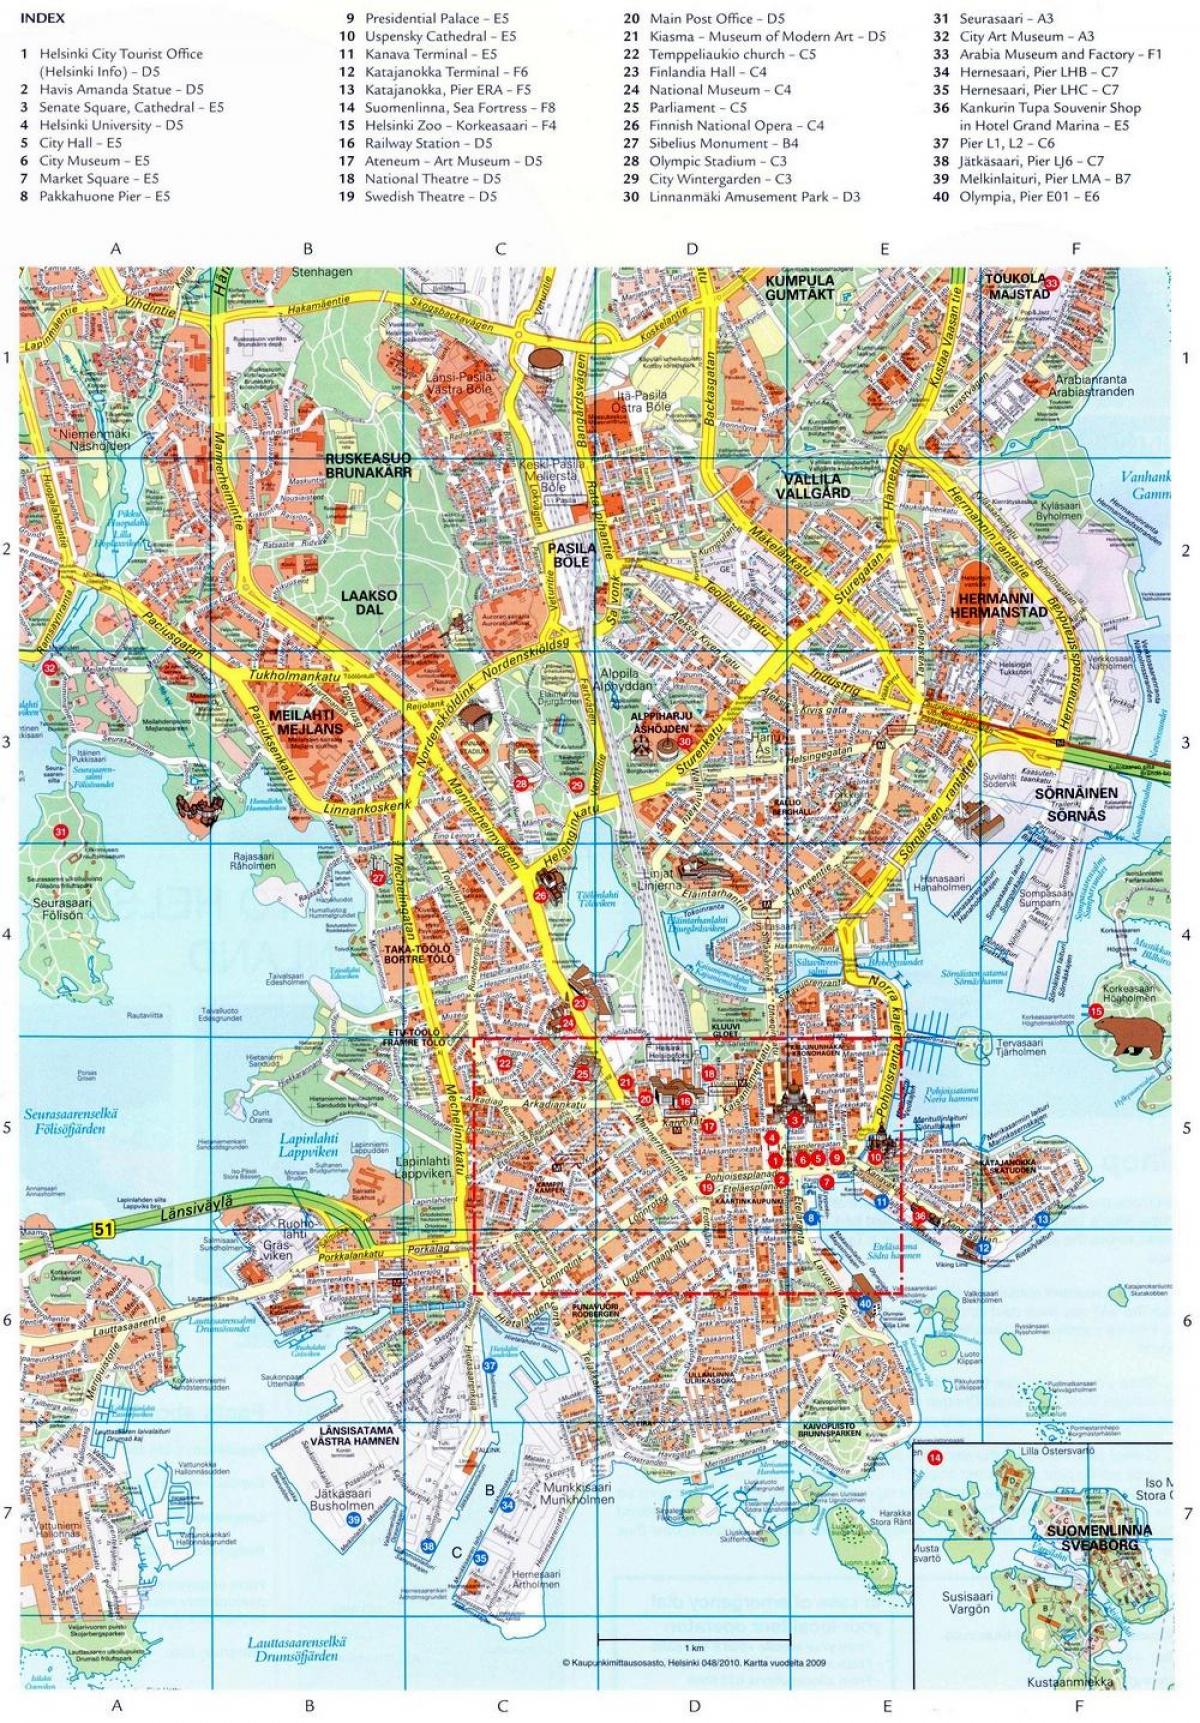 Plan des attractions de Helsinki